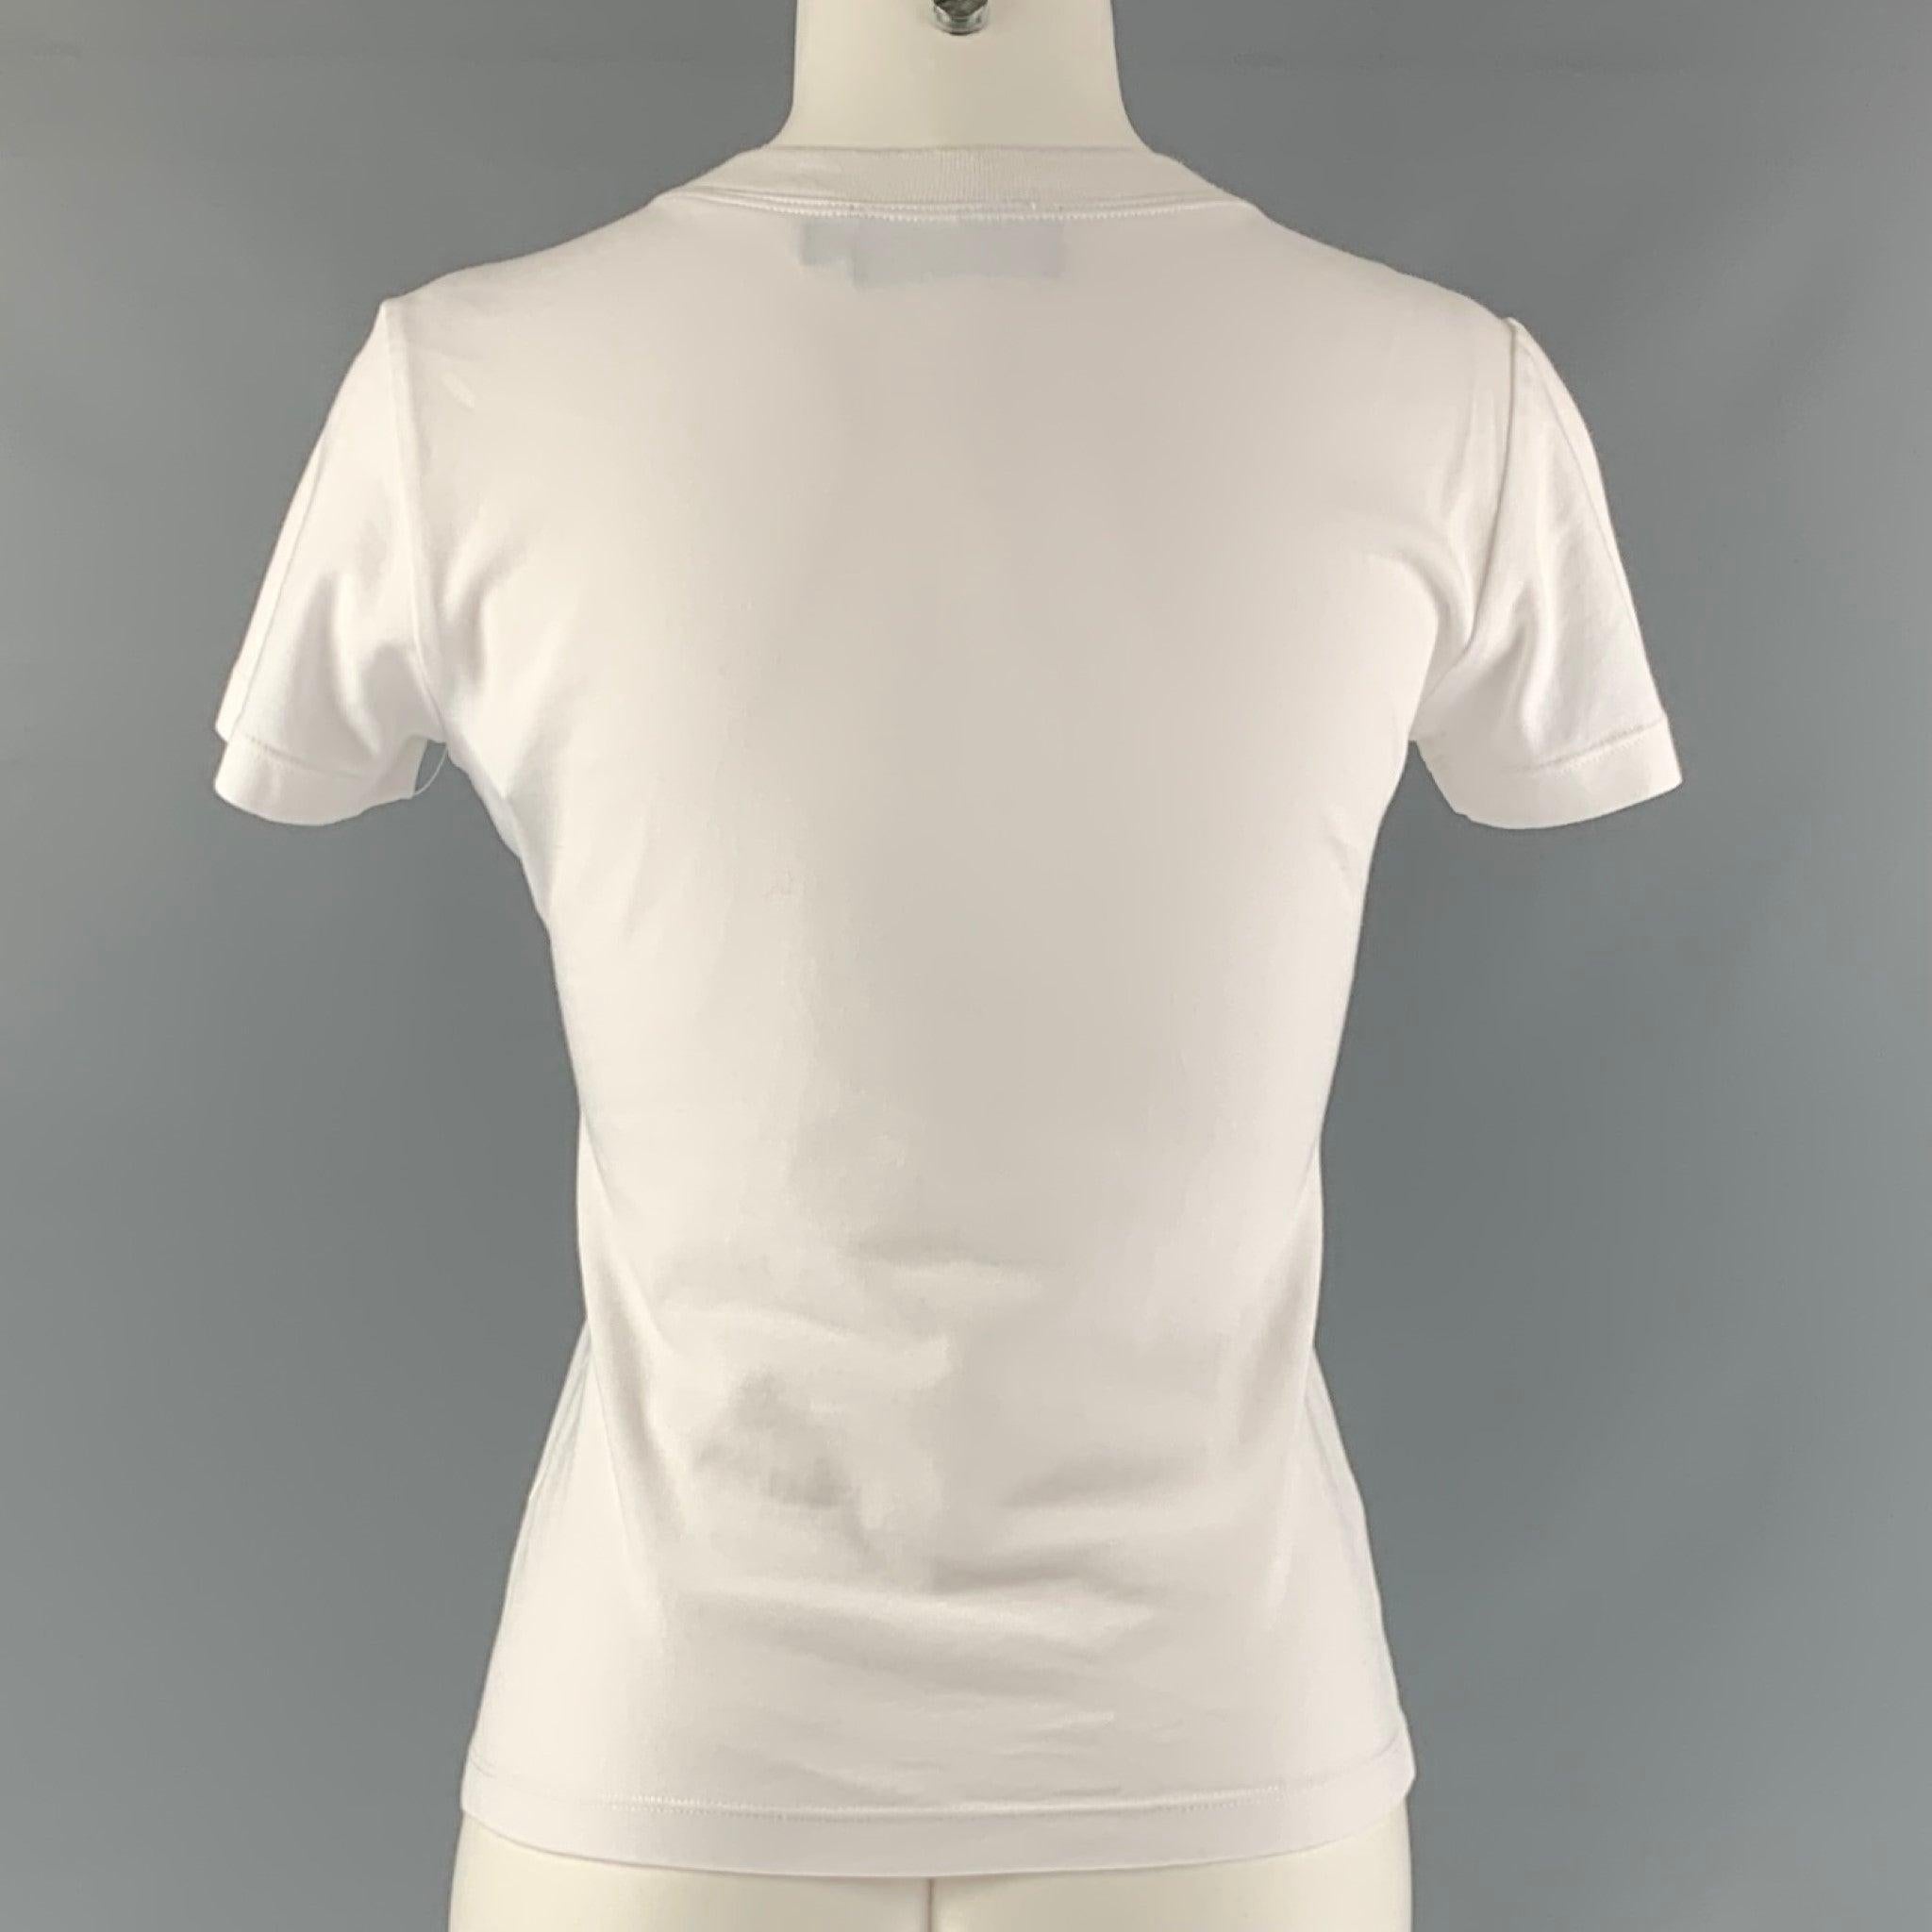 Women's BRANDON MAXWELL Size S White Cotton T-Shirt For Sale